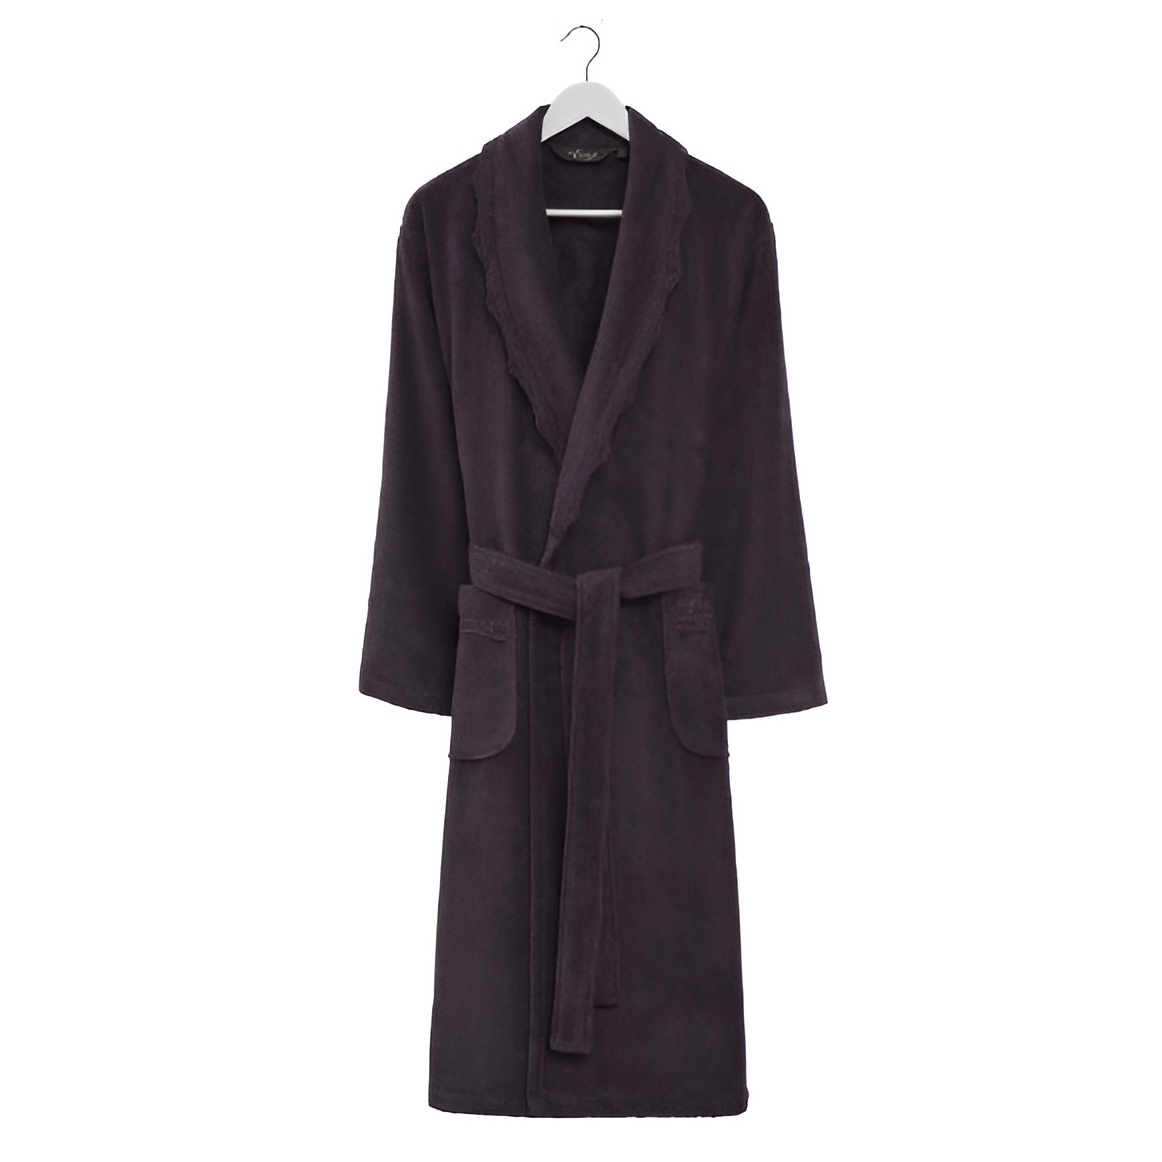 Банный халат Stella цвет: фиолетовый (M)